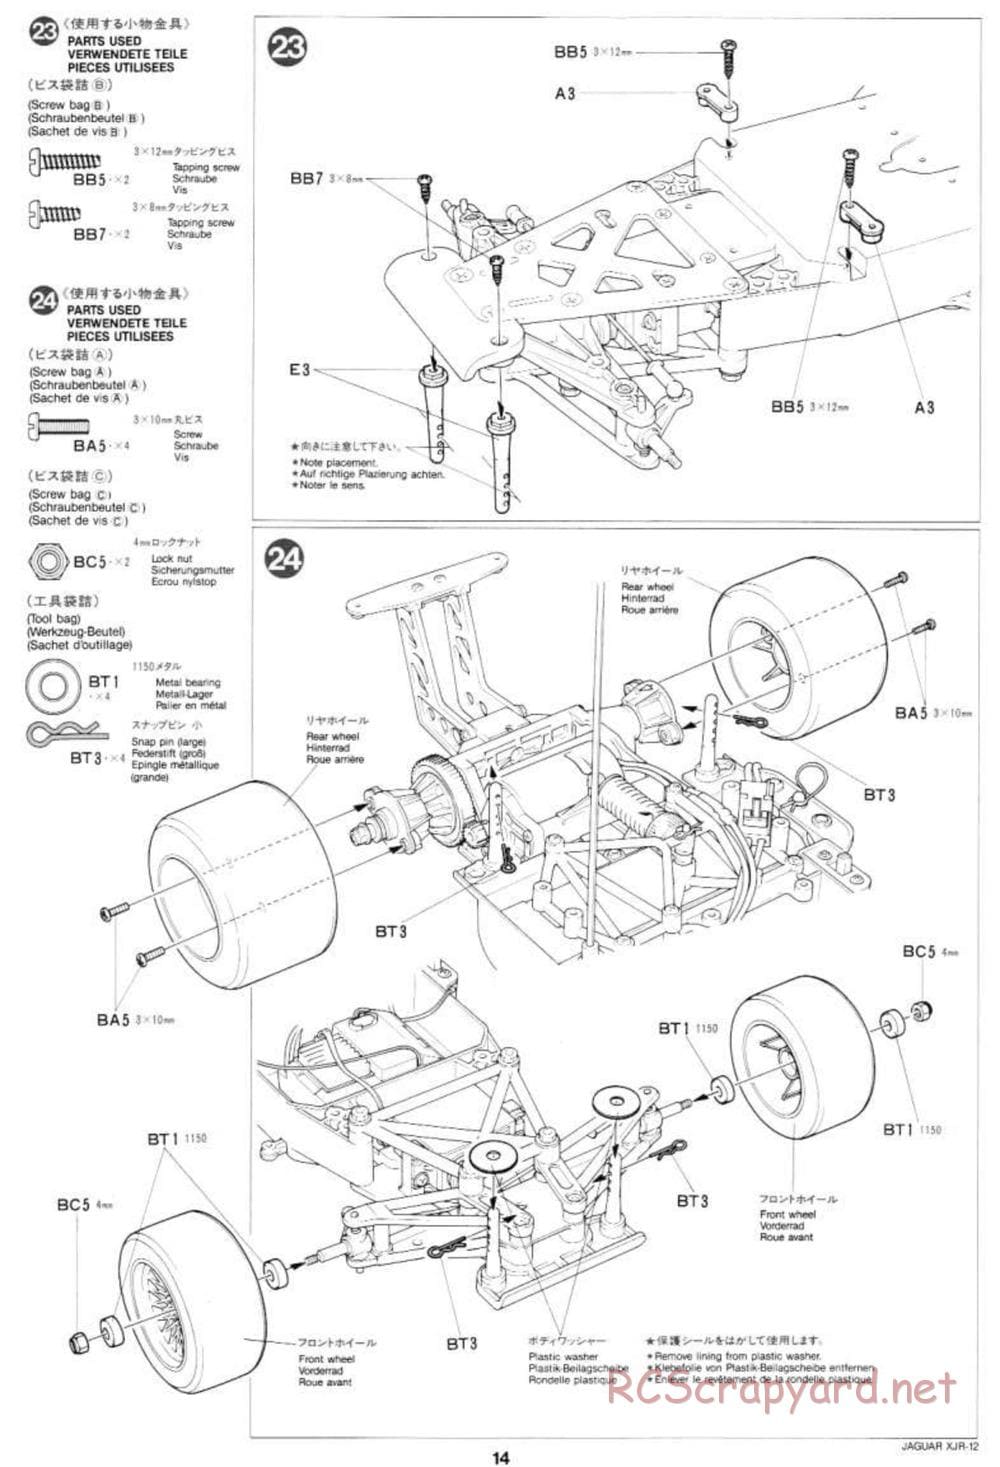 Tamiya - Jaguar XJR-12 Daytona Winner - Group-C Chassis - Manual - Page 14